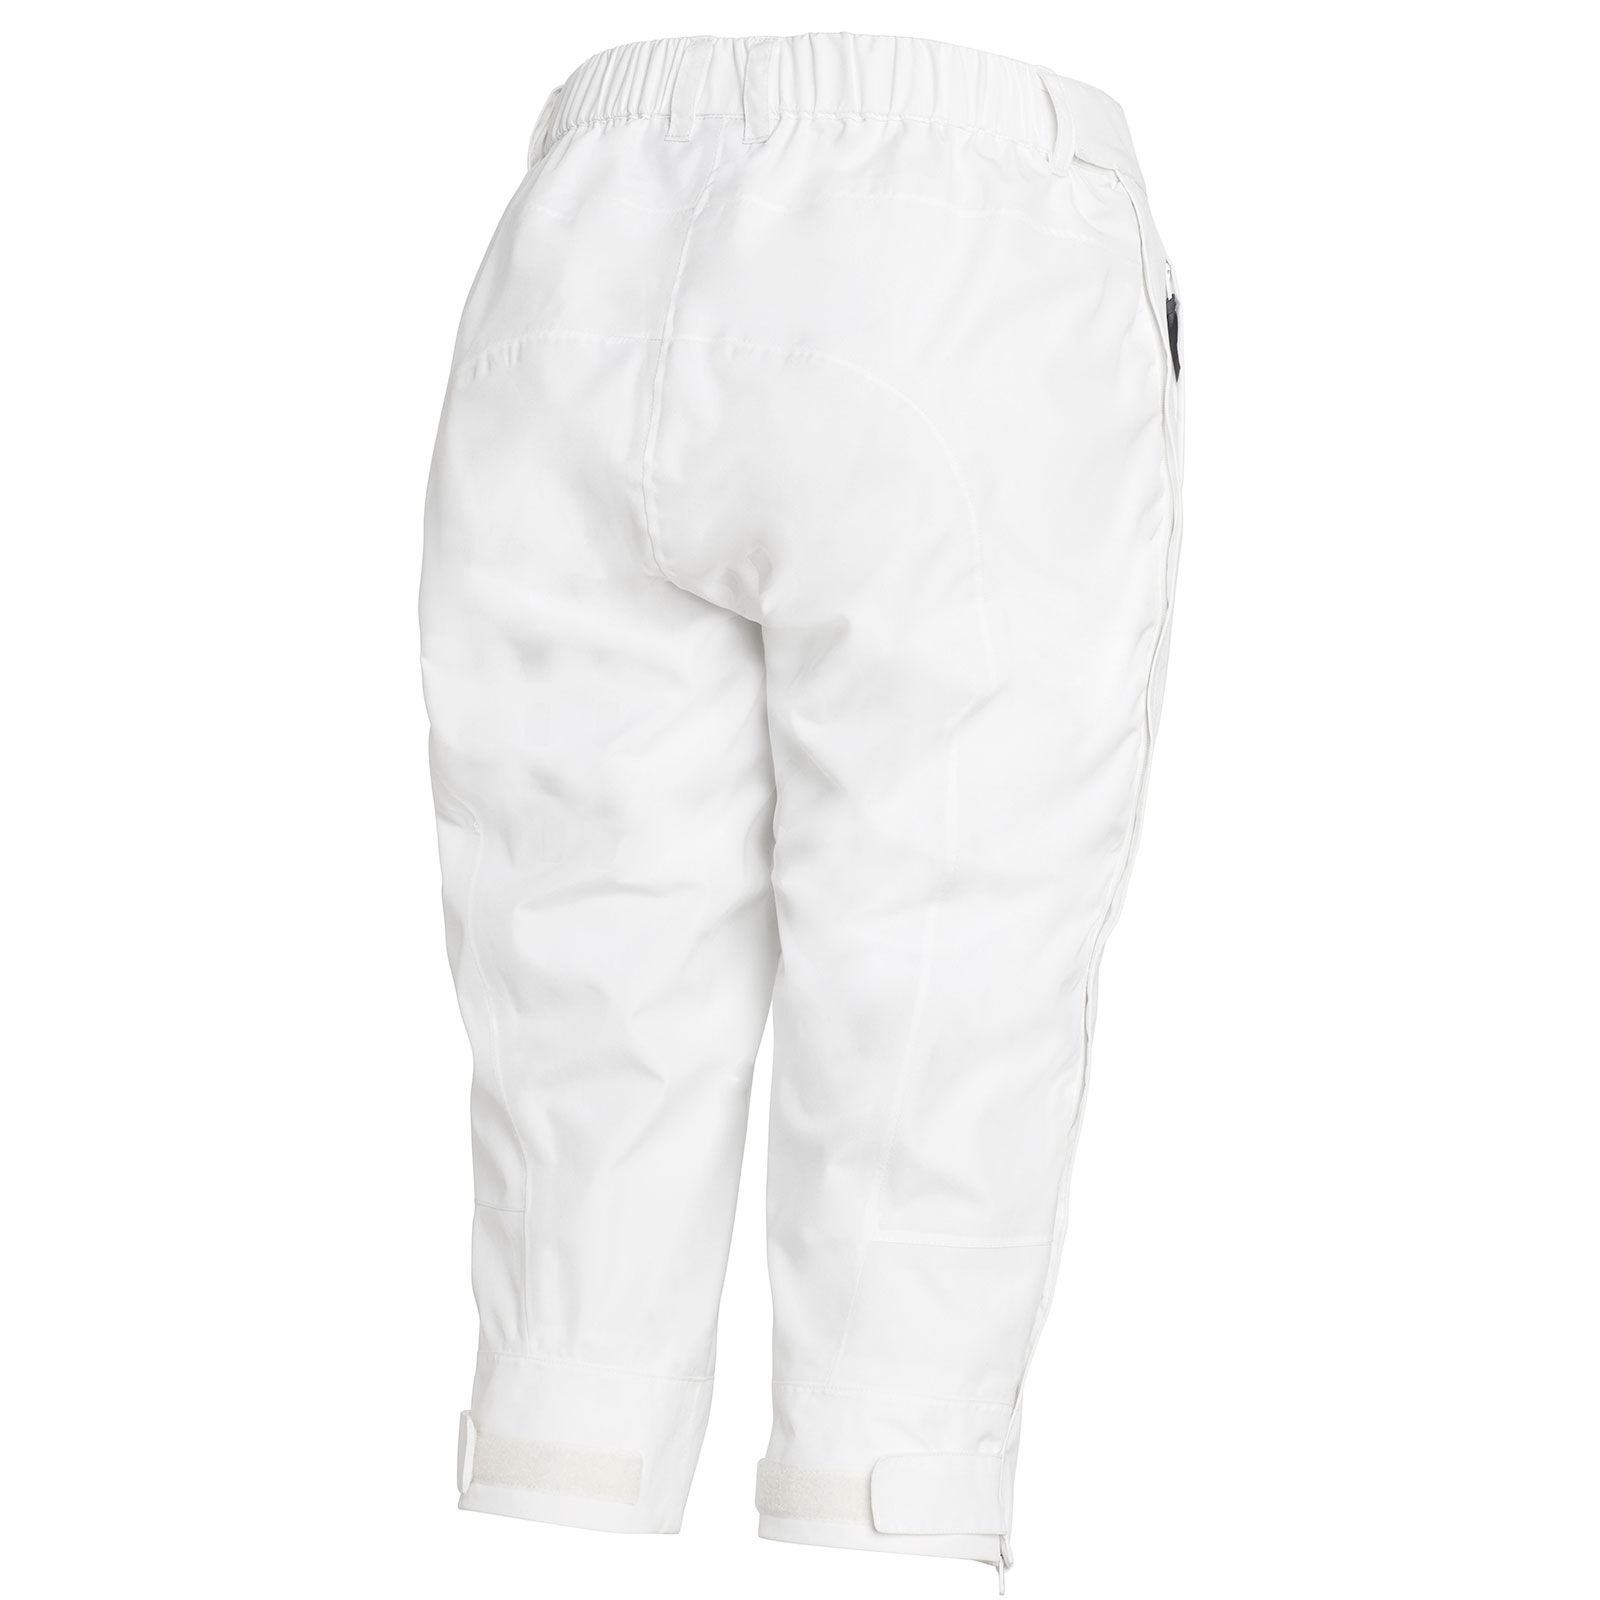 Mens Wax Trouser Waterproof Fabric Over Trousers Leggings 100% Waxed Cotton  | eBay